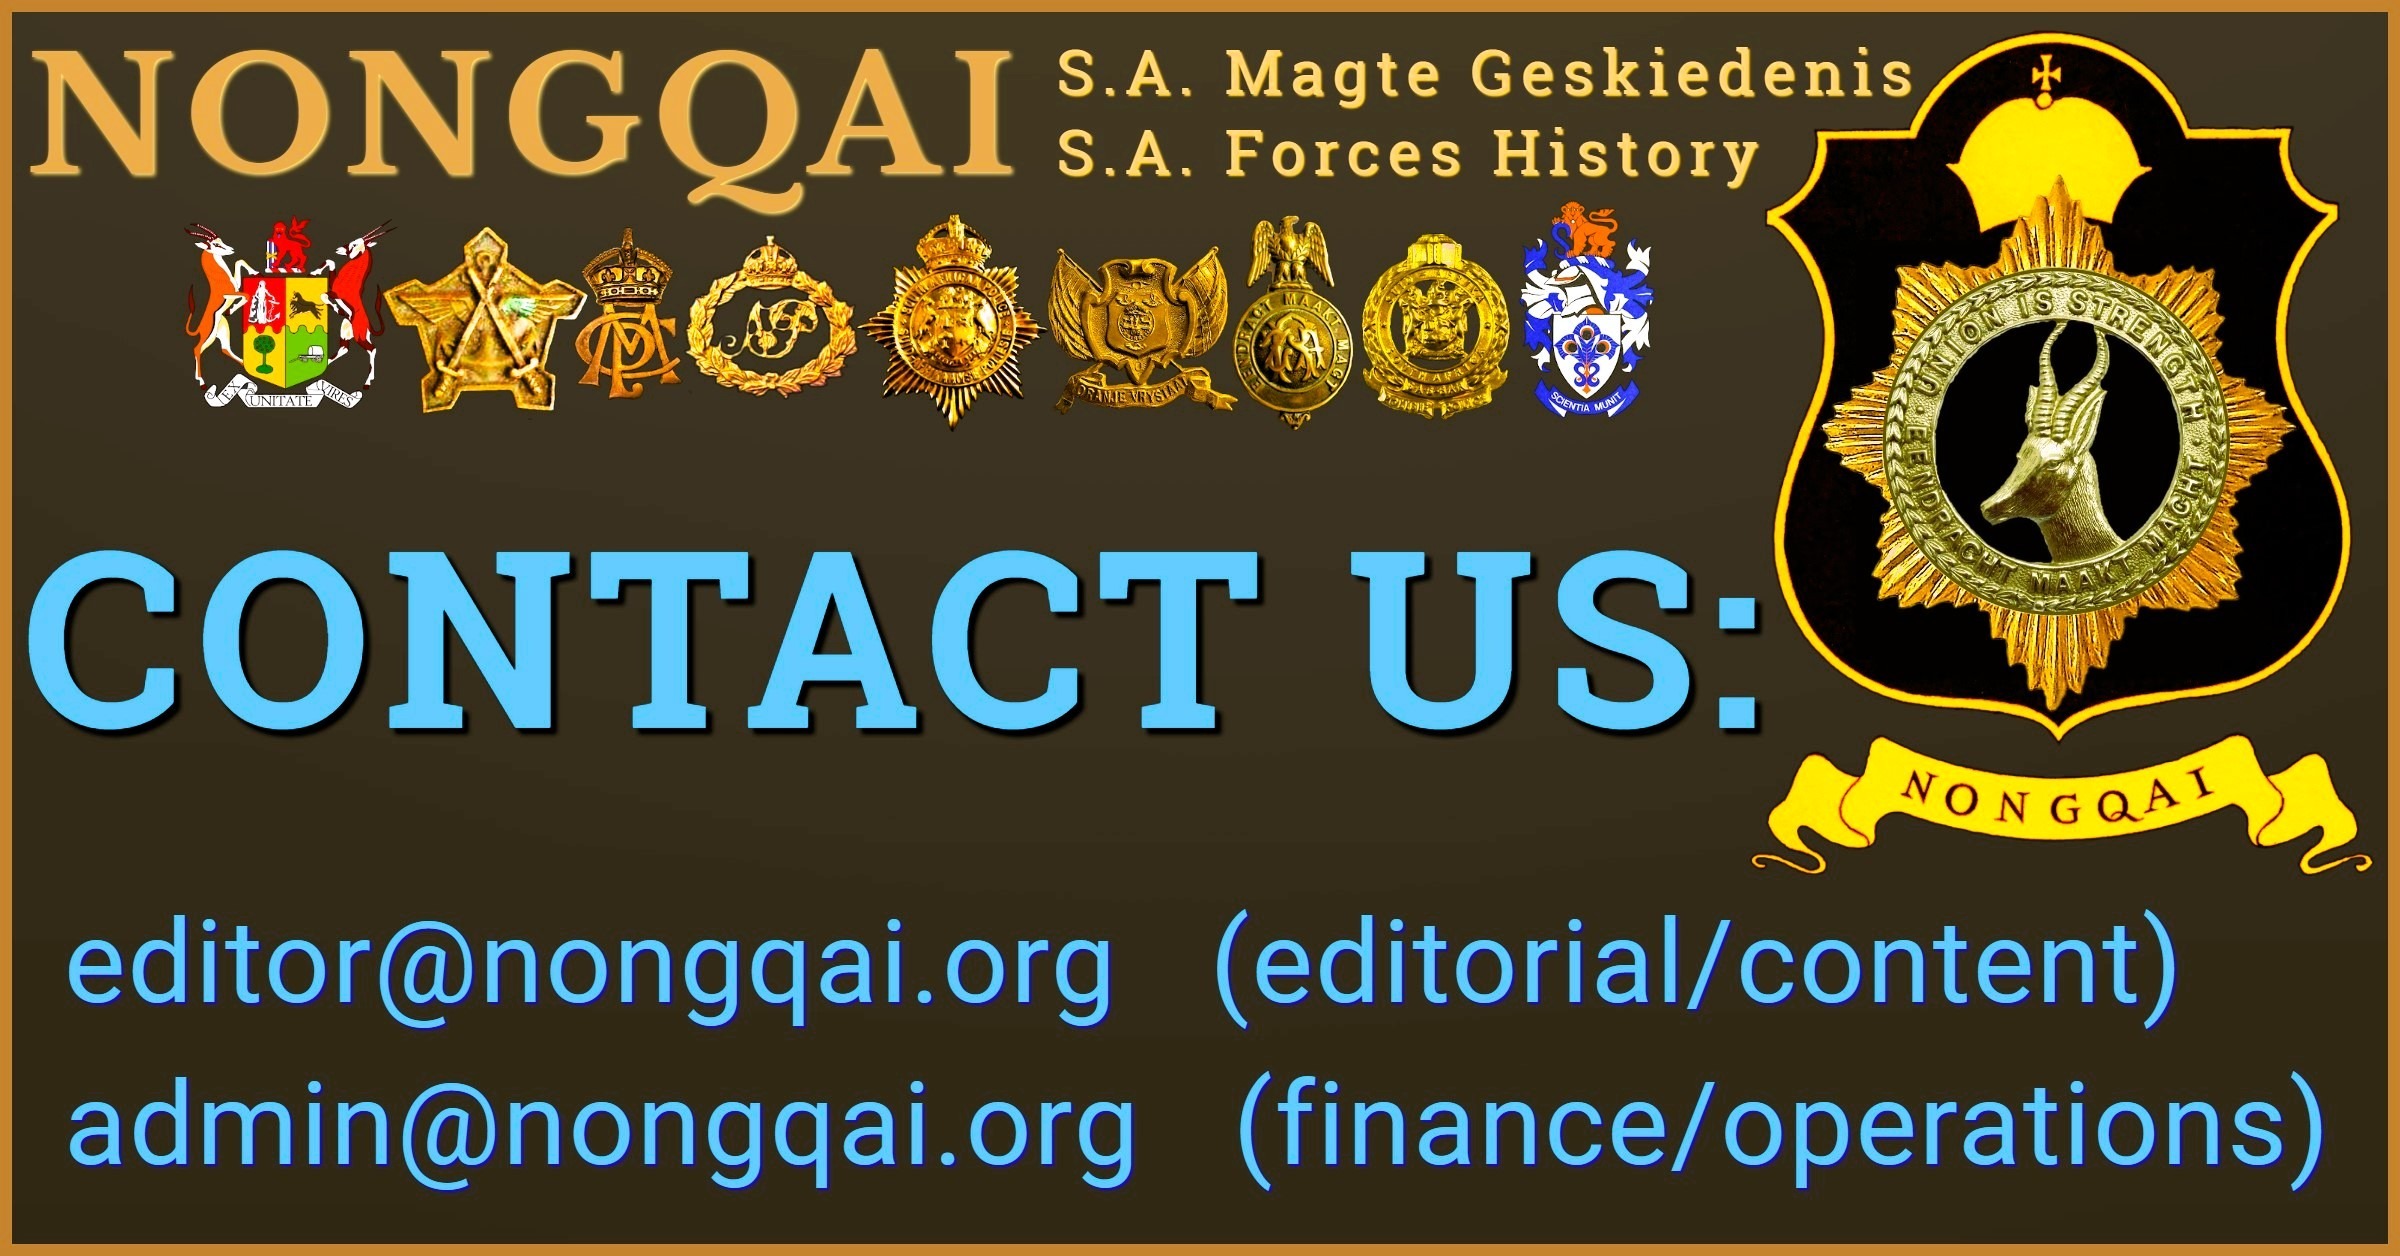 Nongqai Blog Contact Us page header